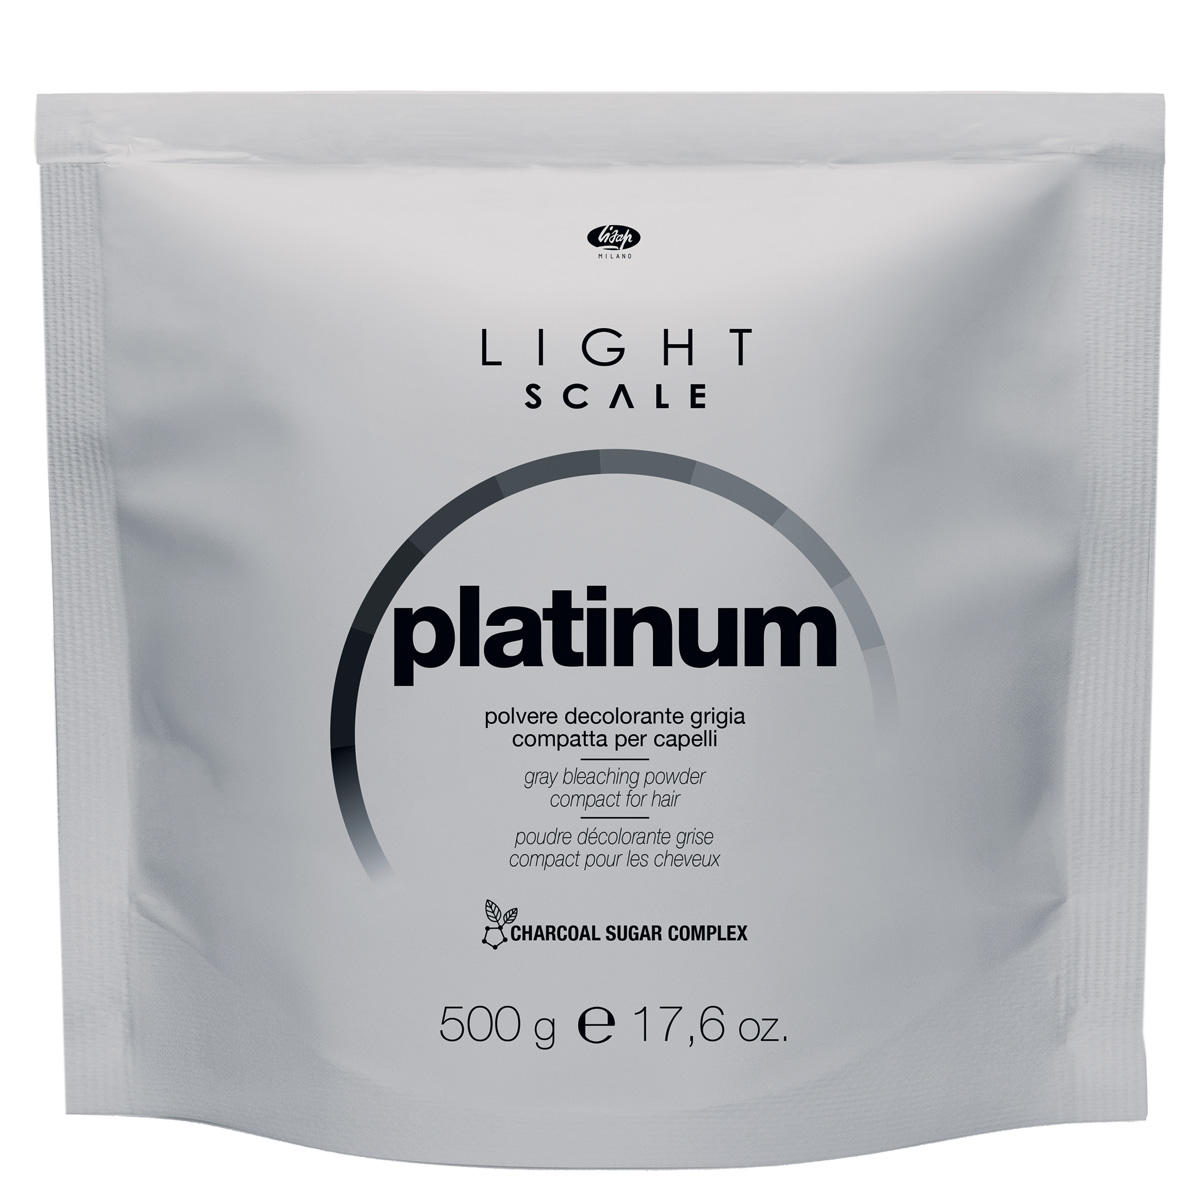 Lisap Light Scale platinum 500 g - 1